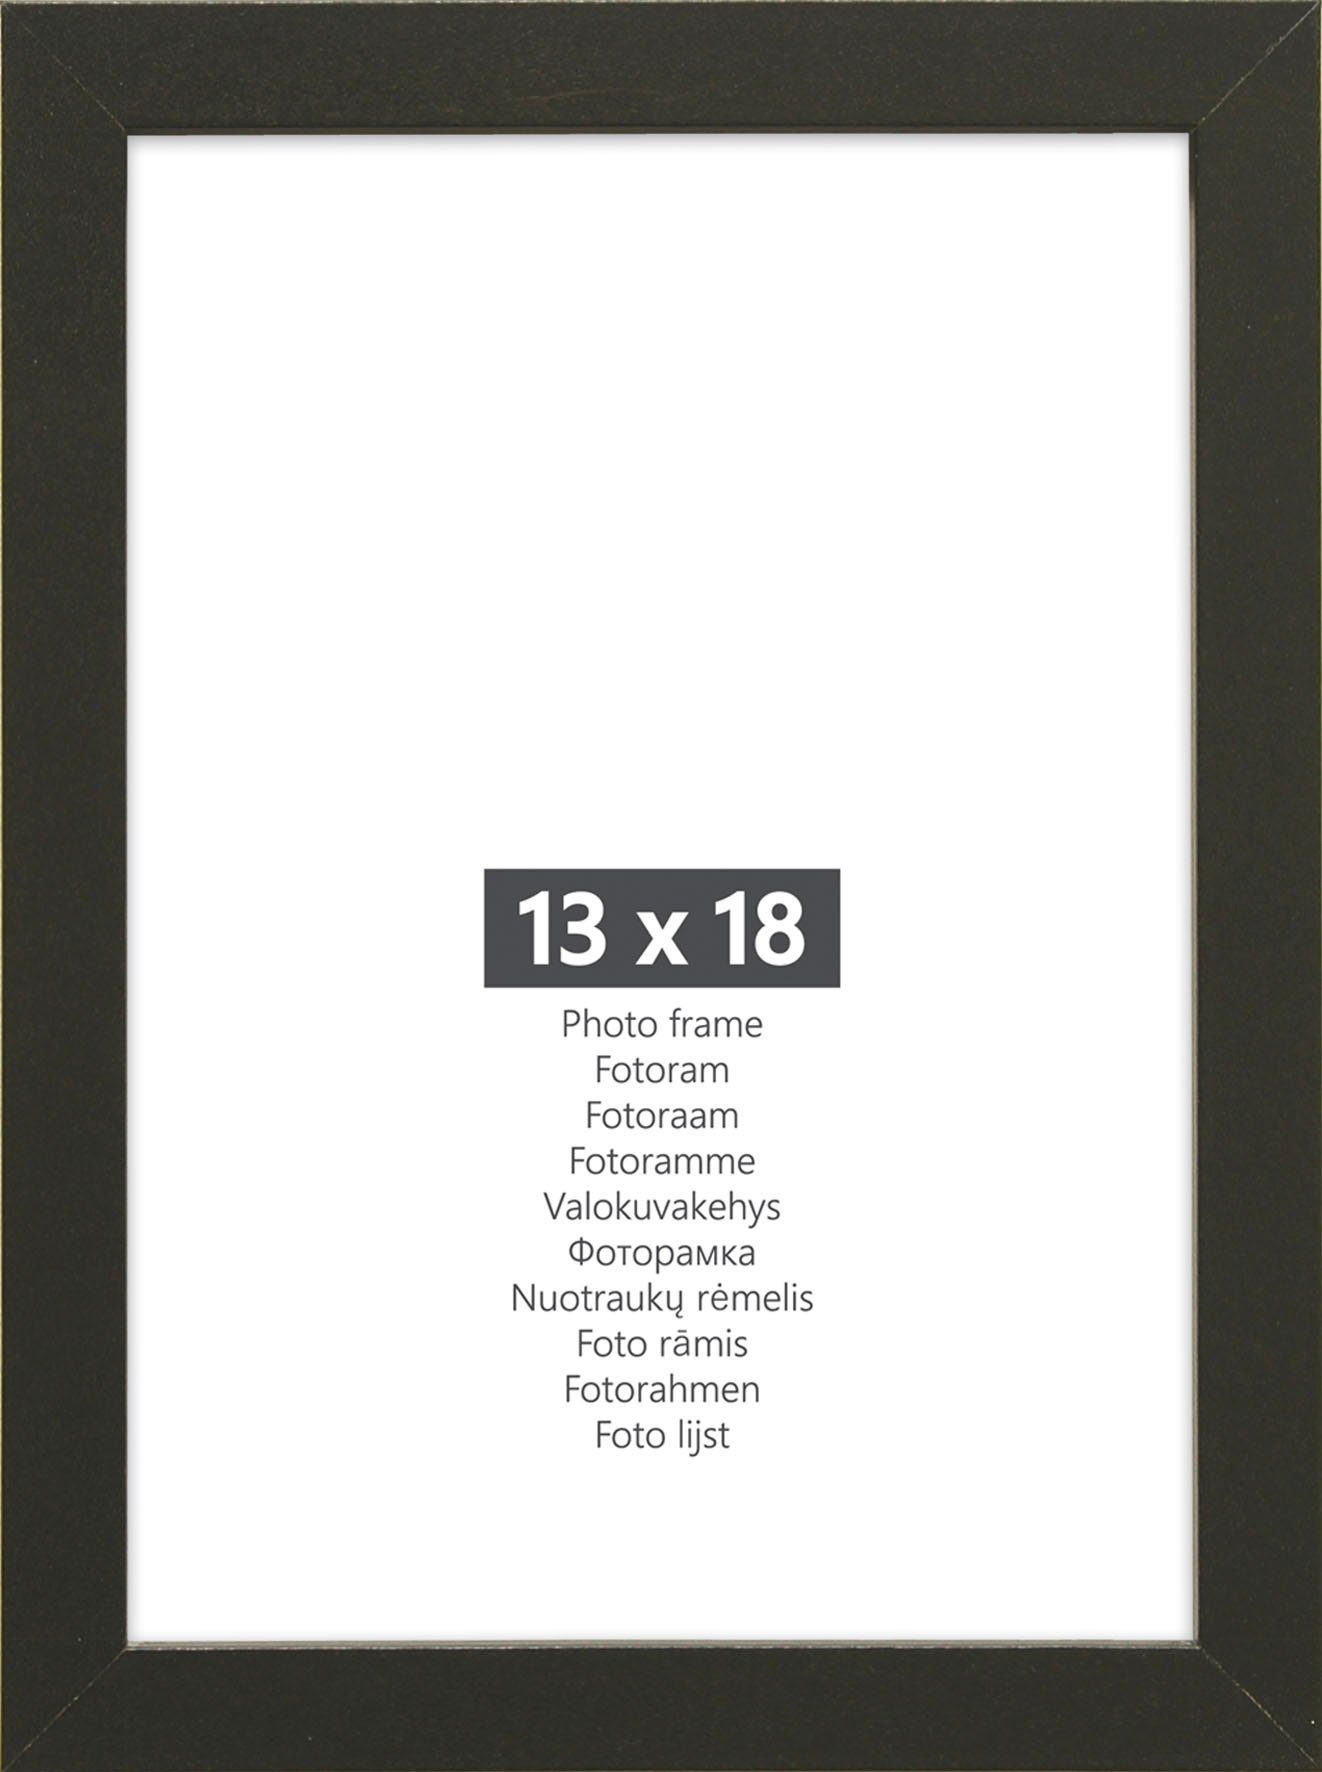 21x30 + 10x15 10er, + cm 4x + 13x18 A5) 2x (DIN 15x20 2x andas (Set, Bilderrahmen-Set St), 2x Bilderrahmen Schwarz A4) 10 (DIN